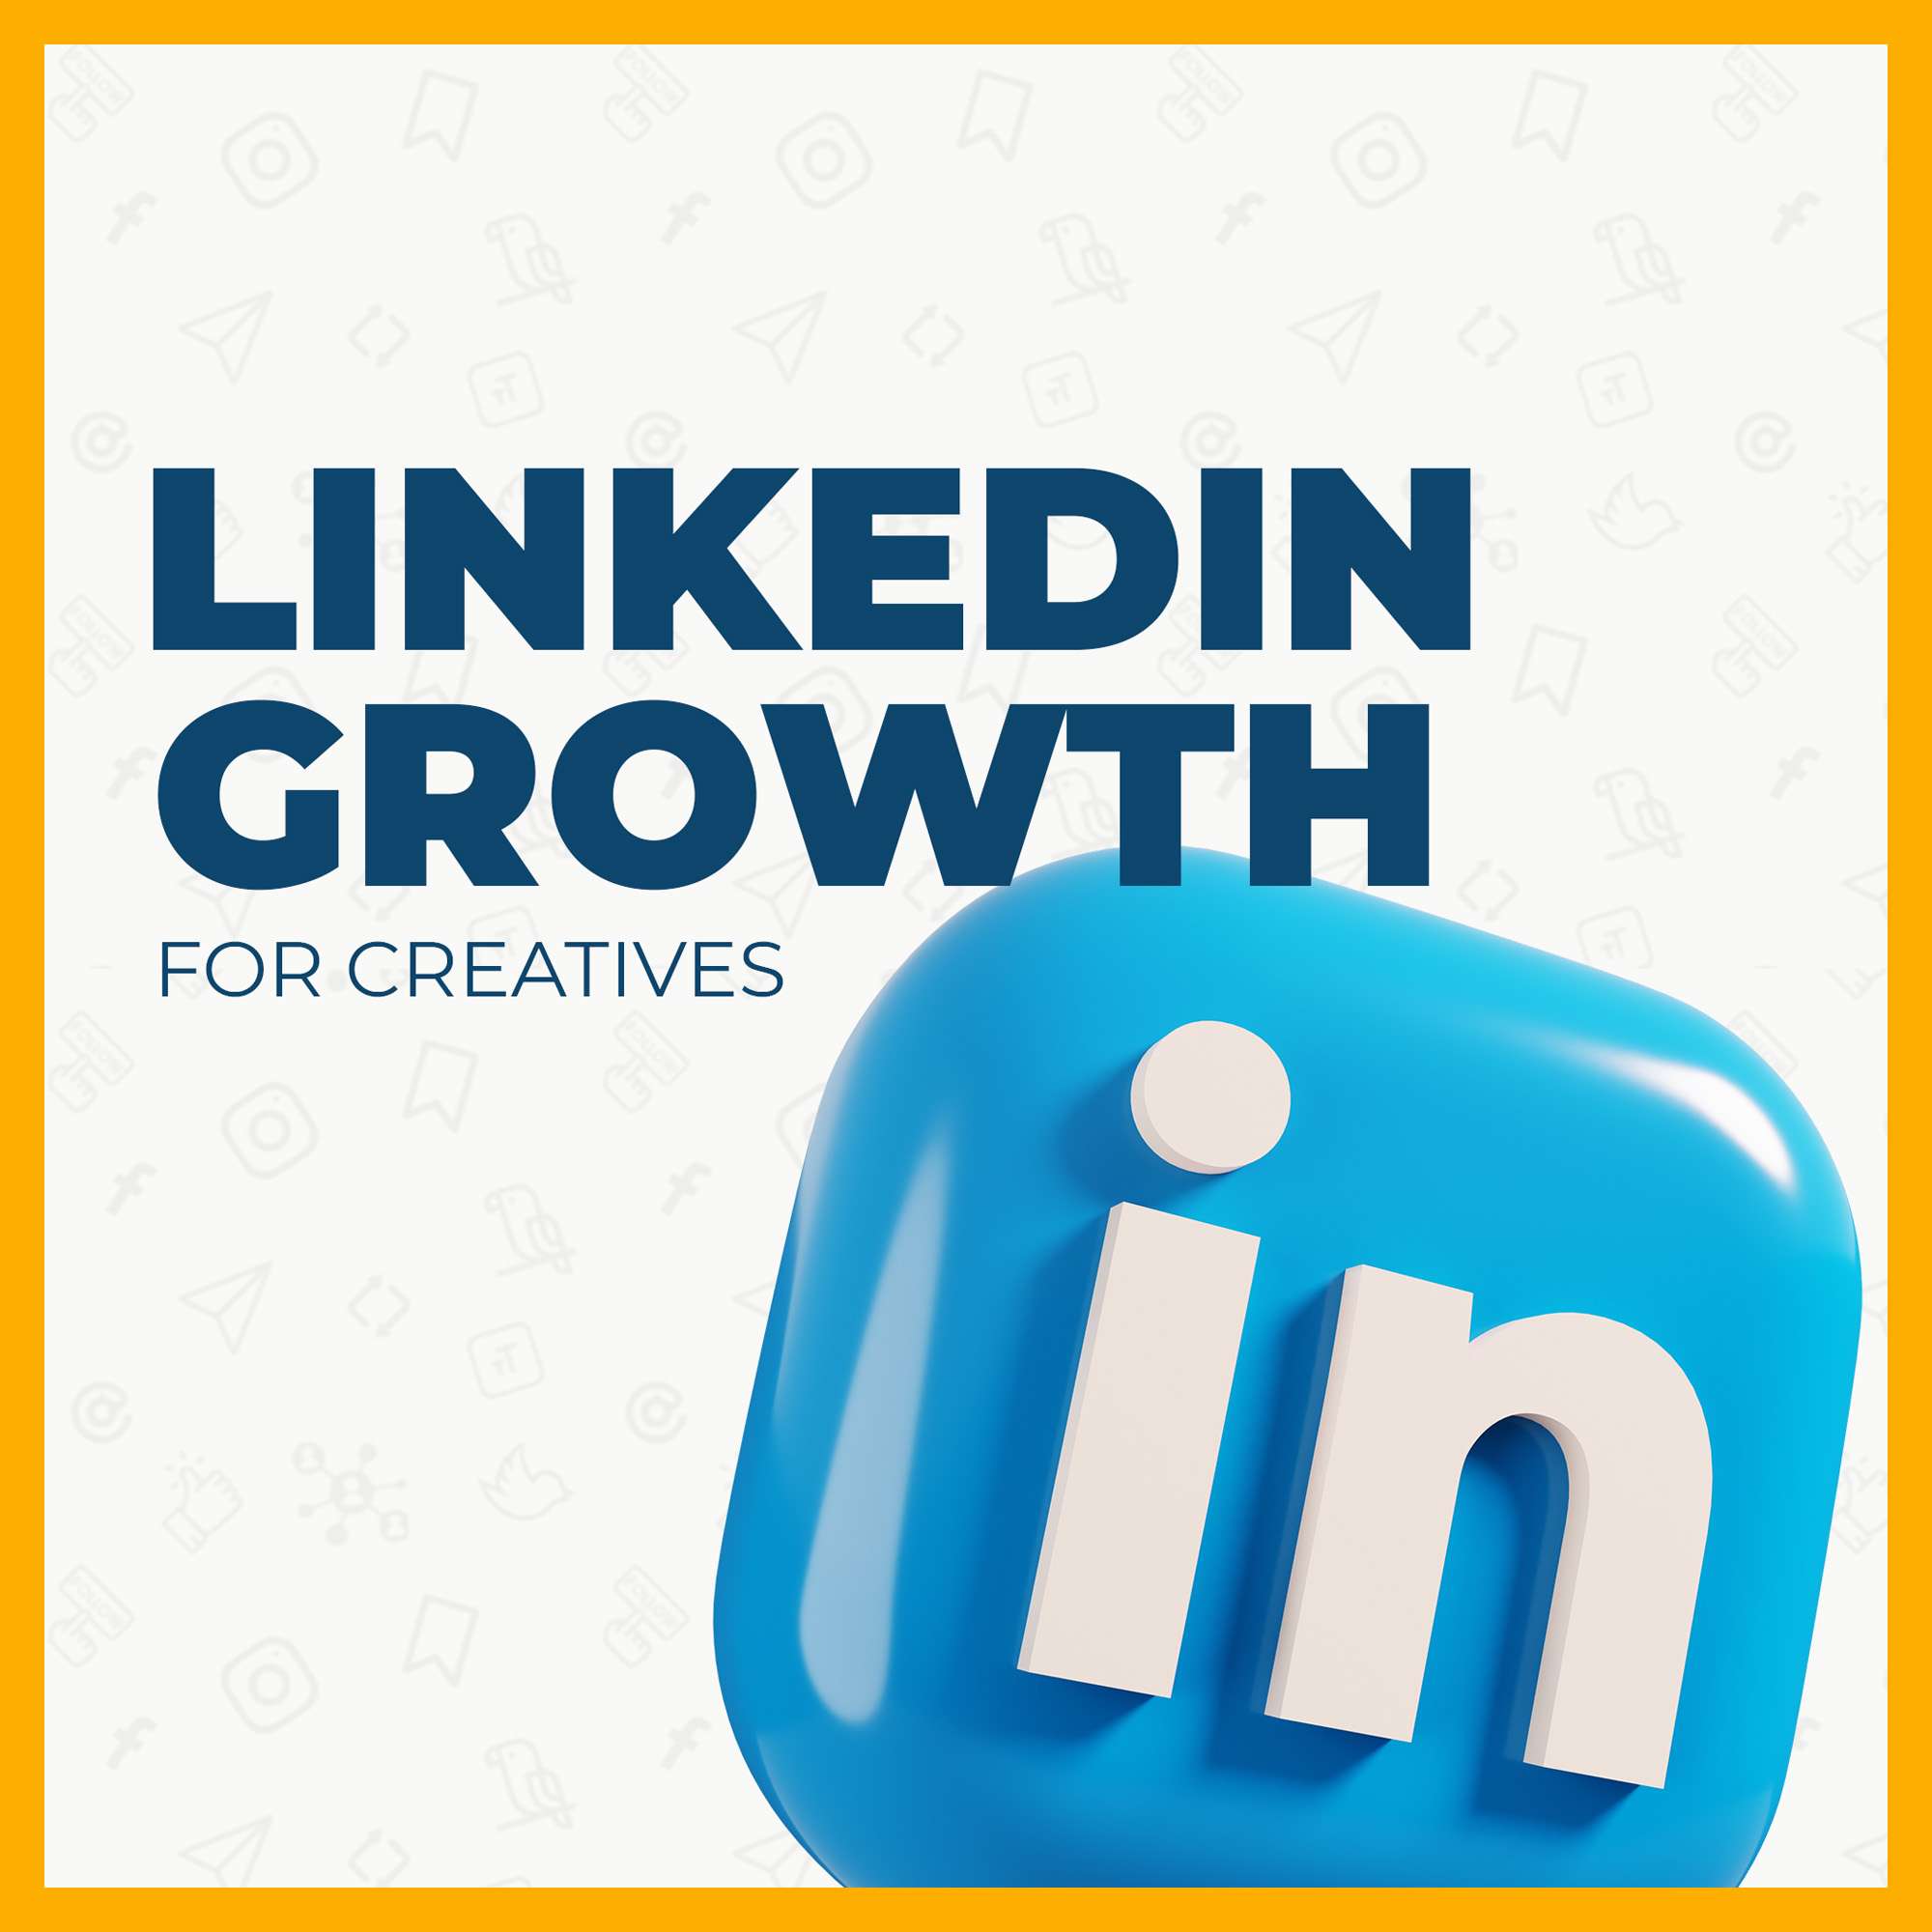 LinkedIn Growth